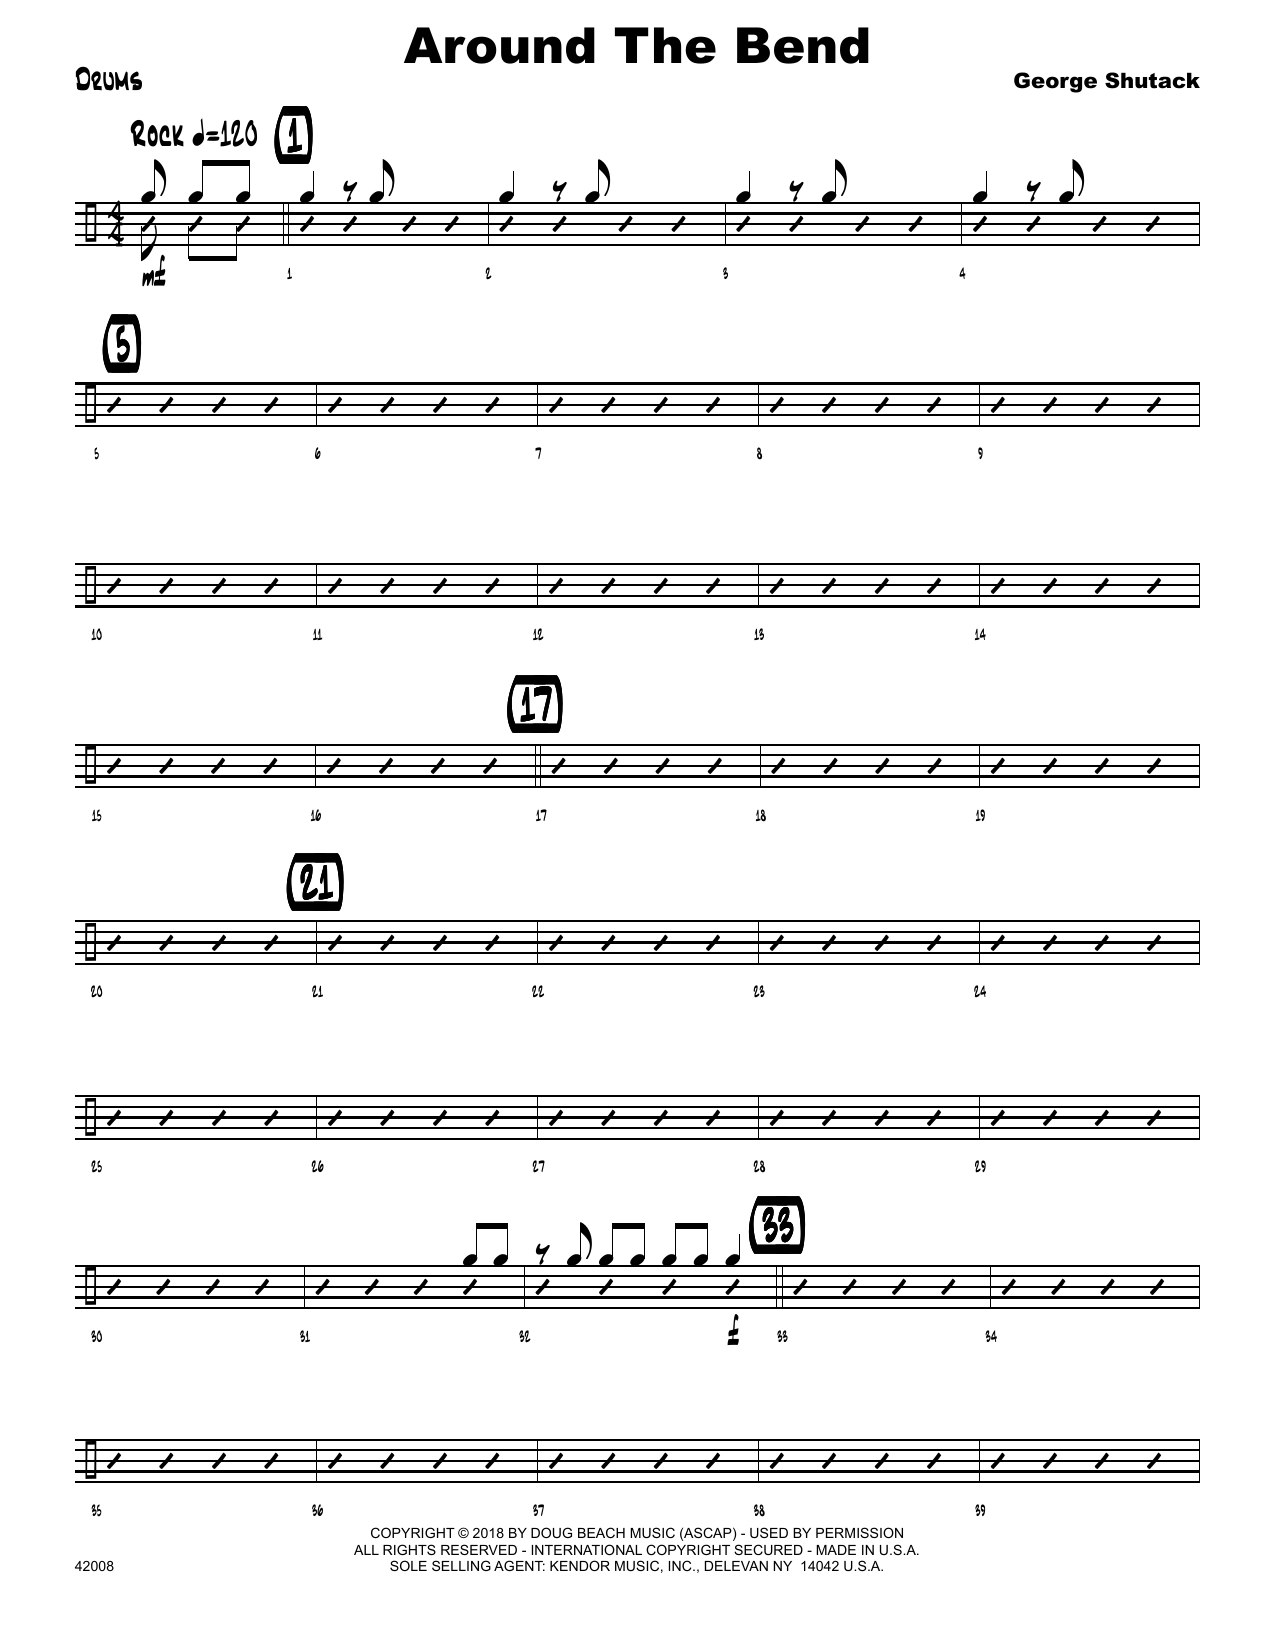 Download George Shutack Around The Bend - Drum Set Sheet Music